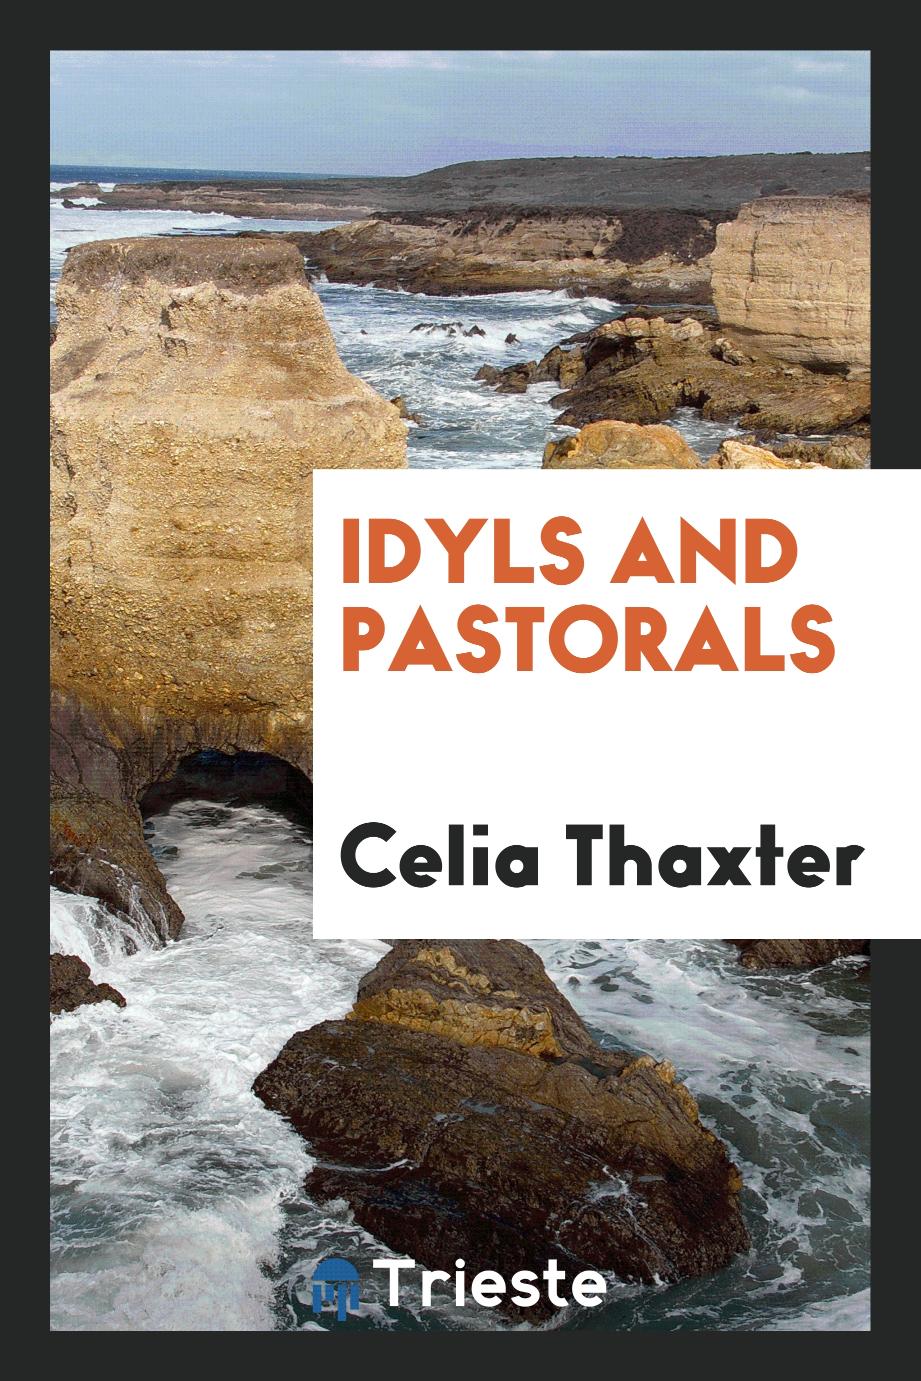 Idyls and pastorals